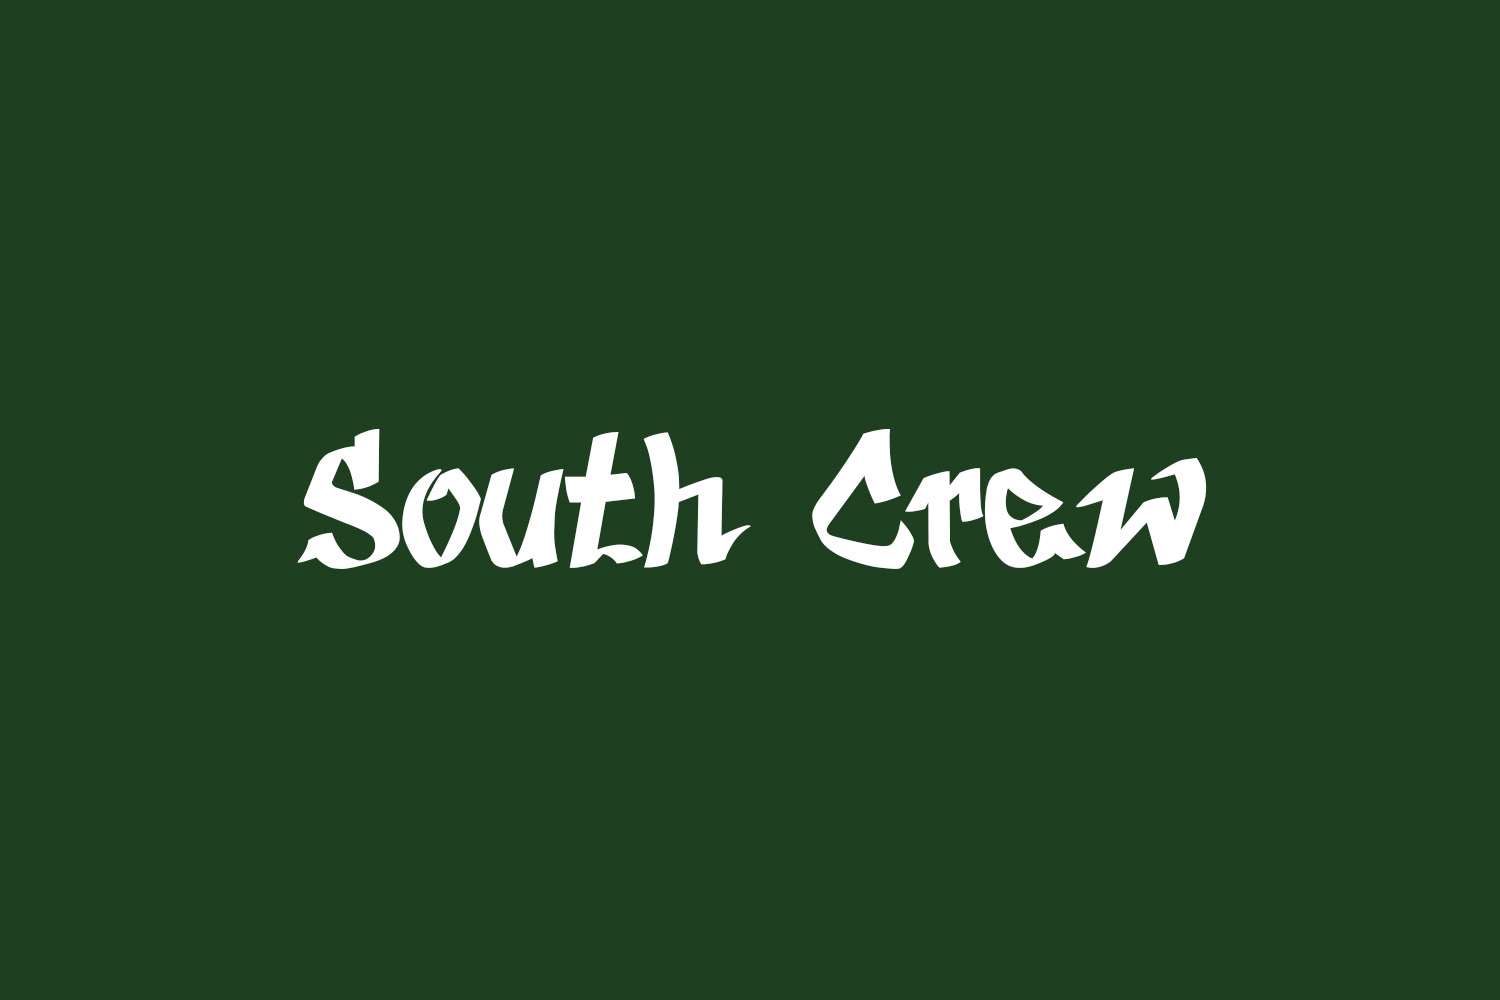 South Crew Free Font